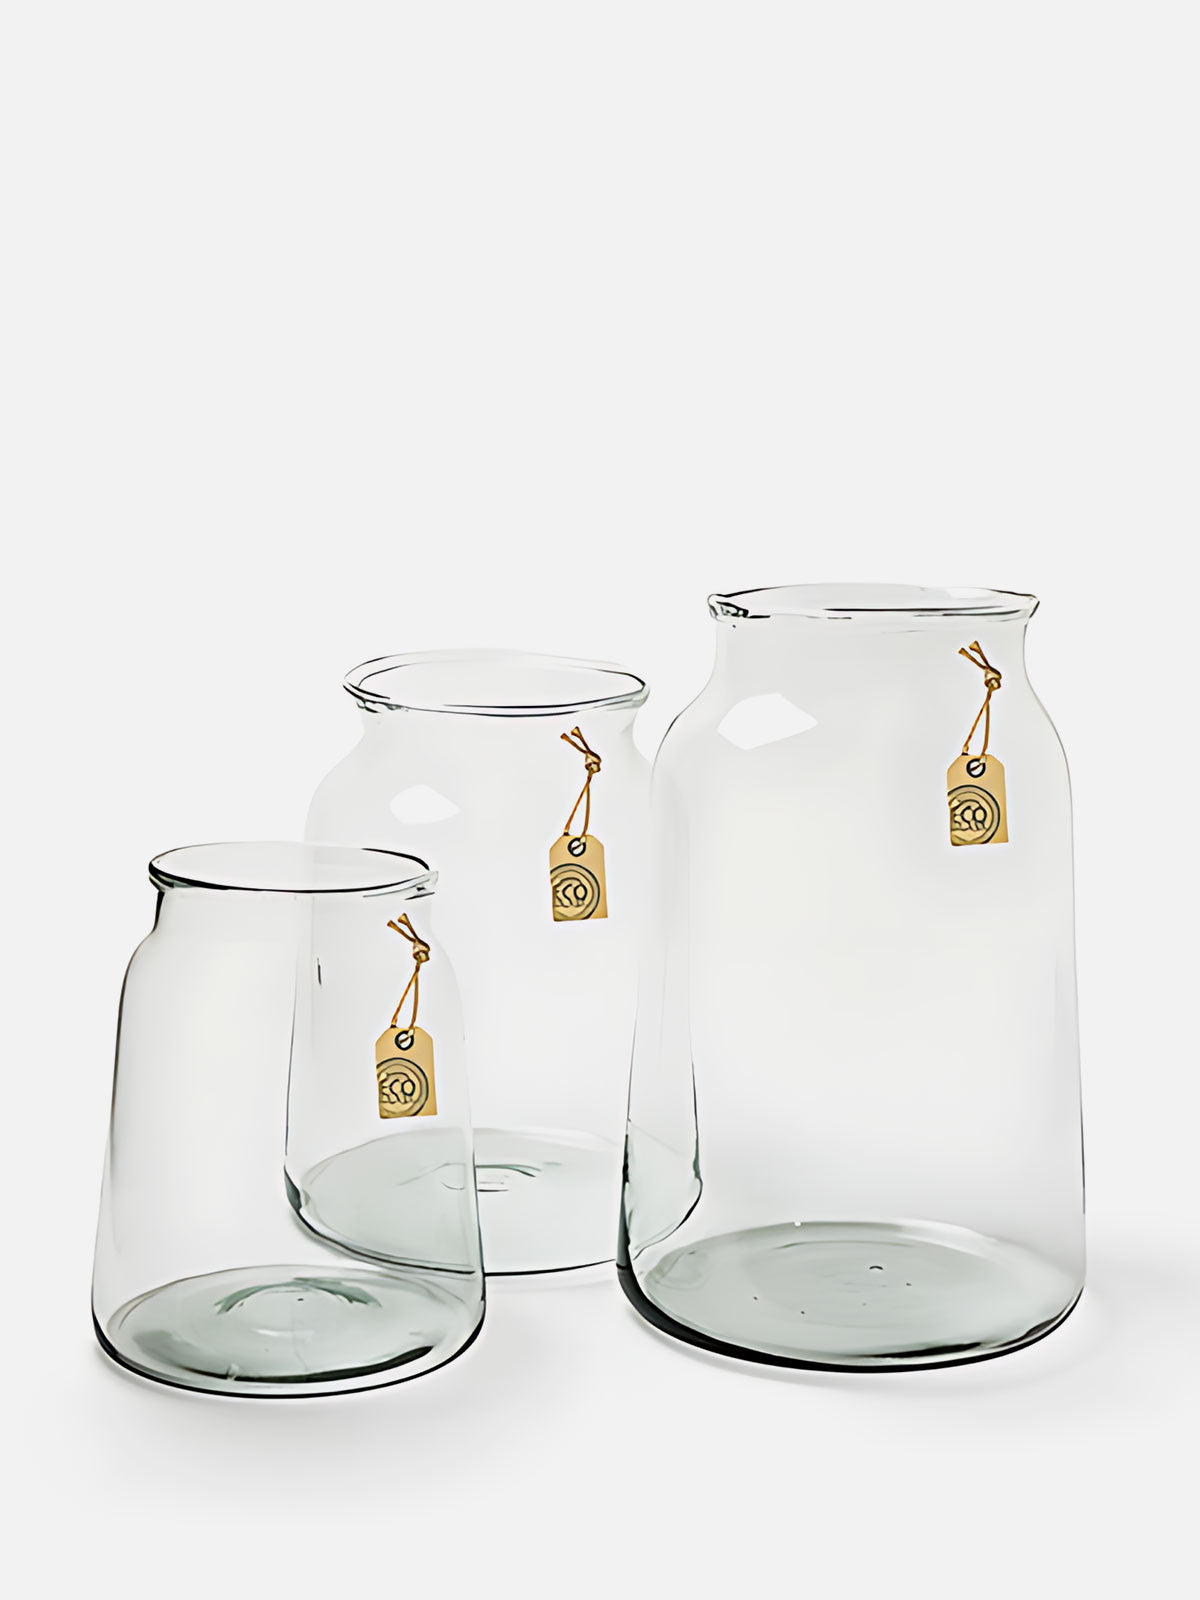 Eco Glass Vase - B